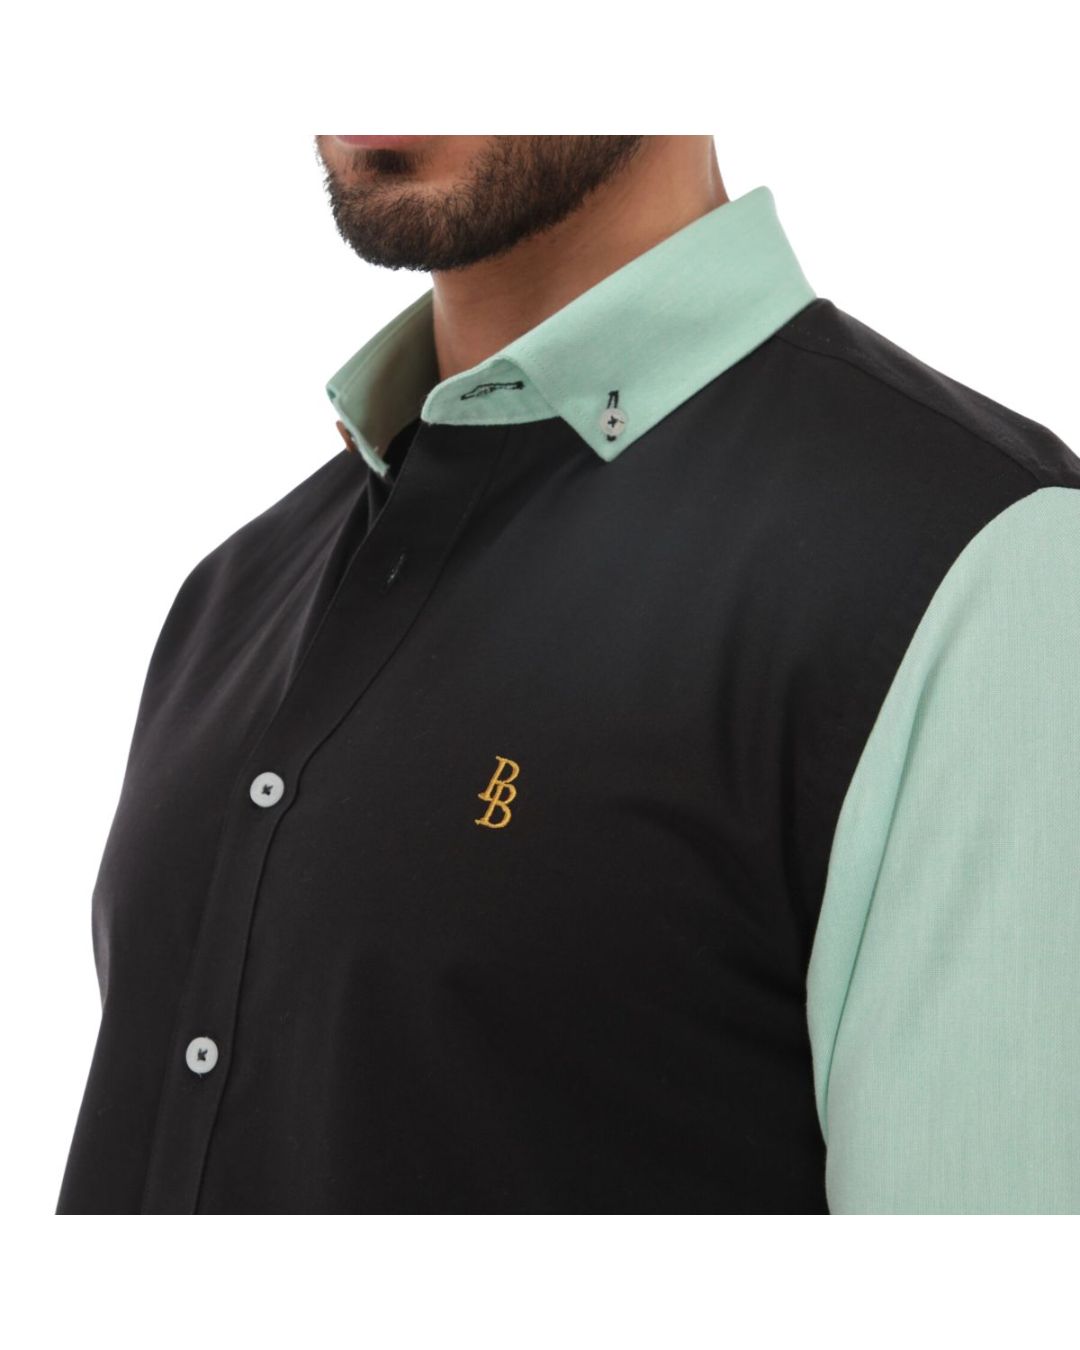 Men's Patchwork Long Sleeve Button Down Shirt Black Yellow & Green